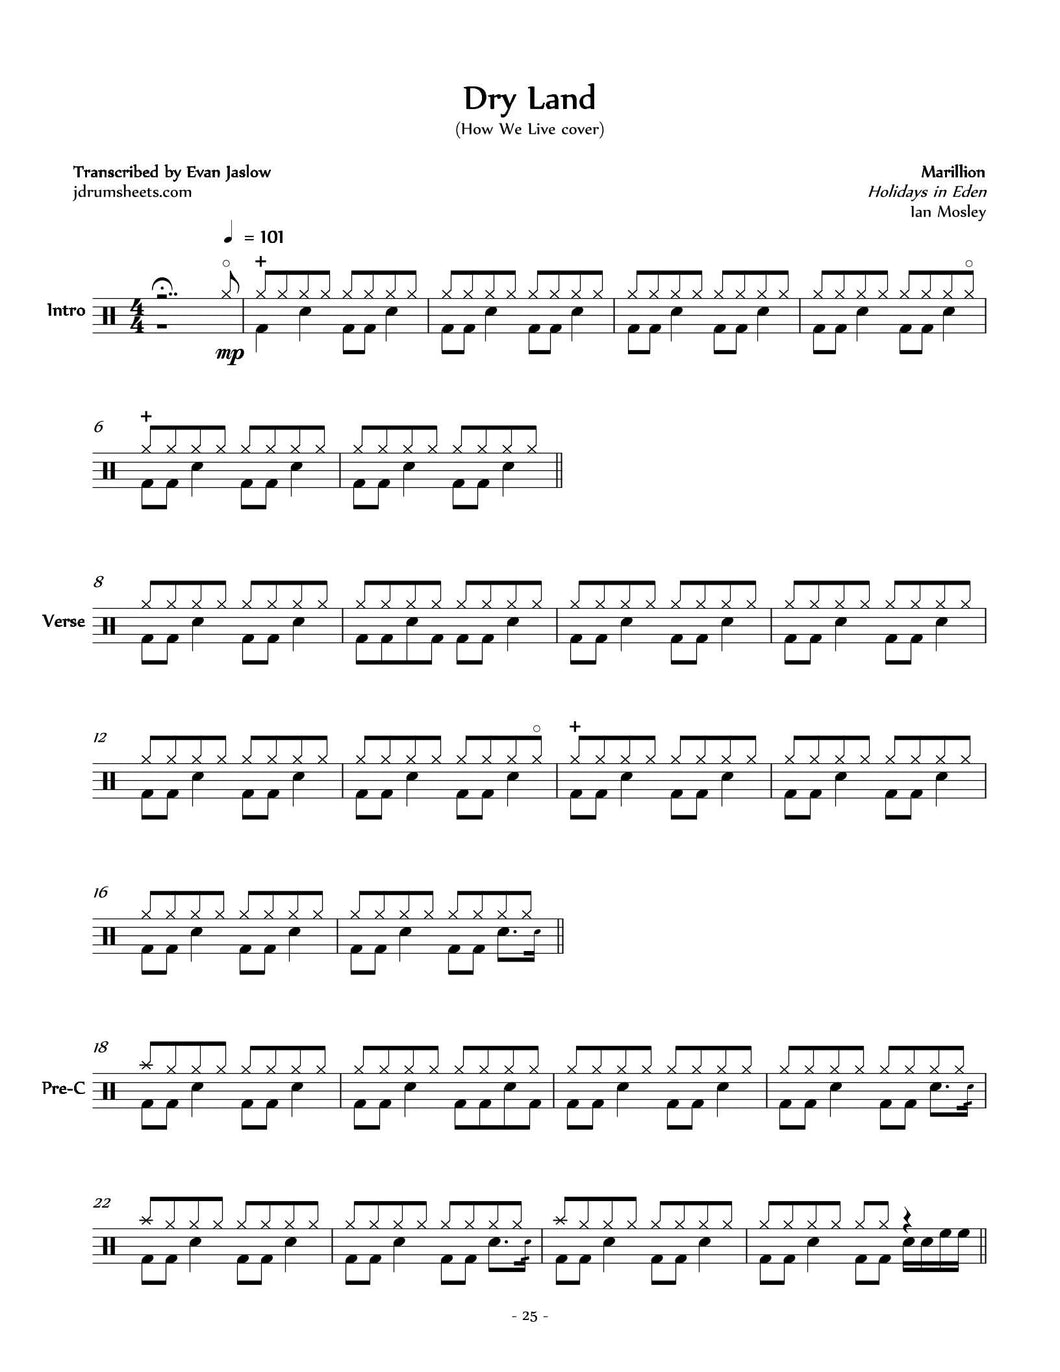 Dry Land - Marillion - Full Drum Transcription / Drum Sheet Music - Jaslow Drum Sheets